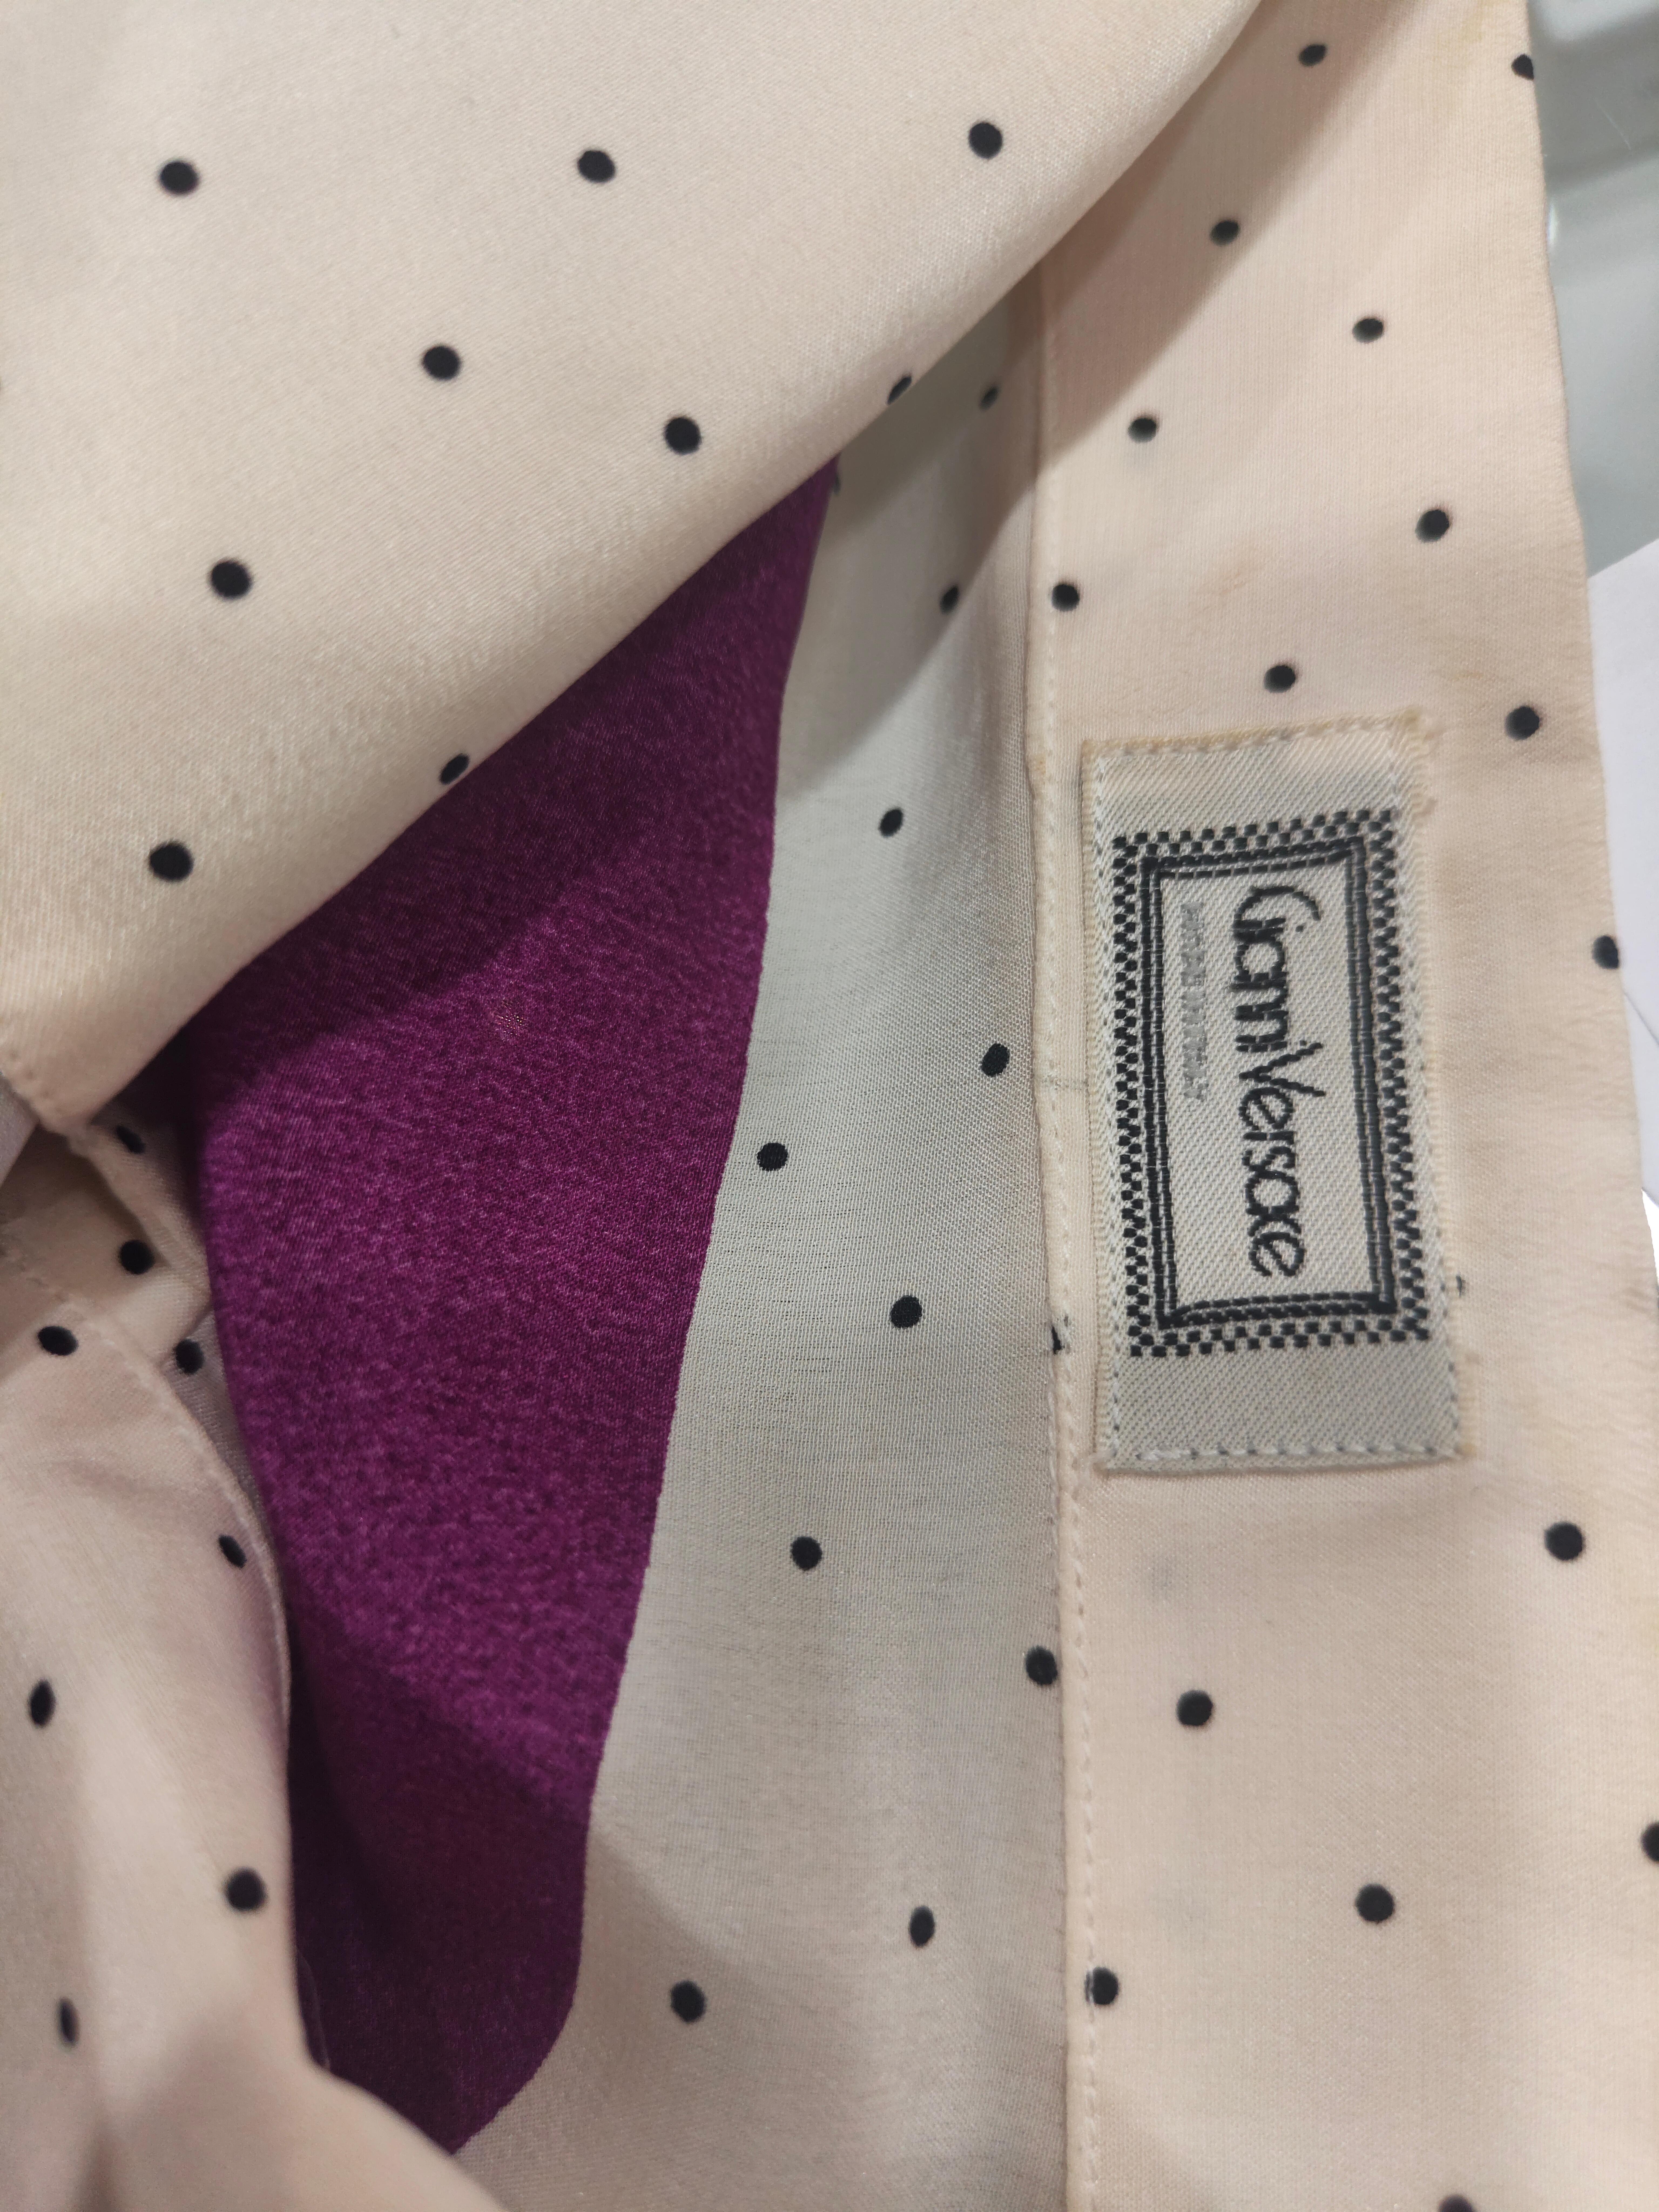 Gianni Versace polka dot shirt
Cream, purple and Blue
Size 50